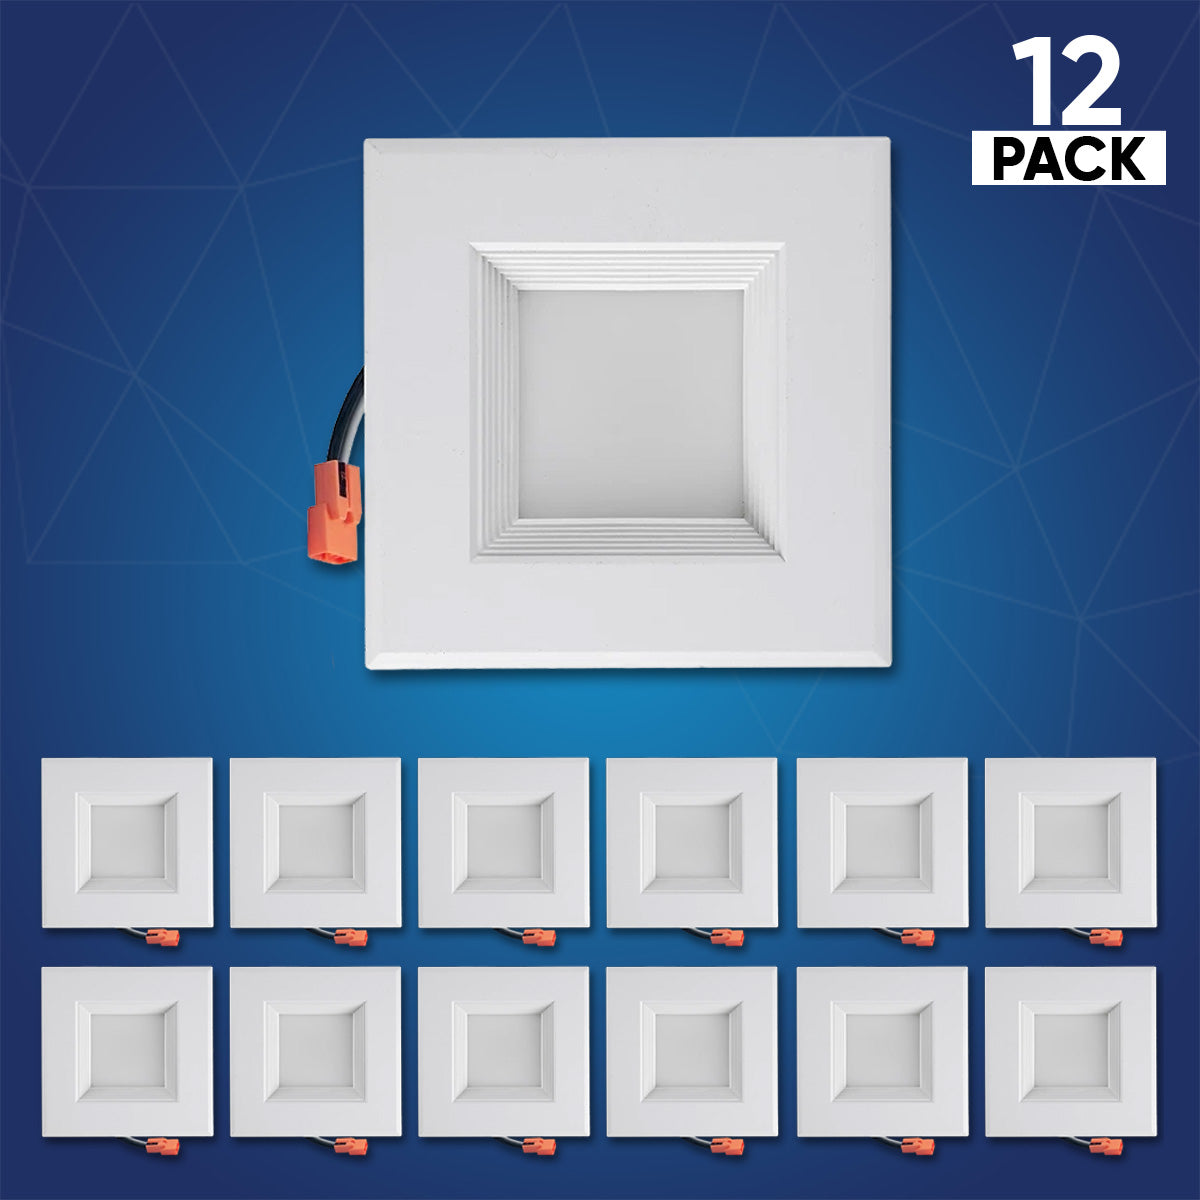 4" Square LED Downlight- 12 pack